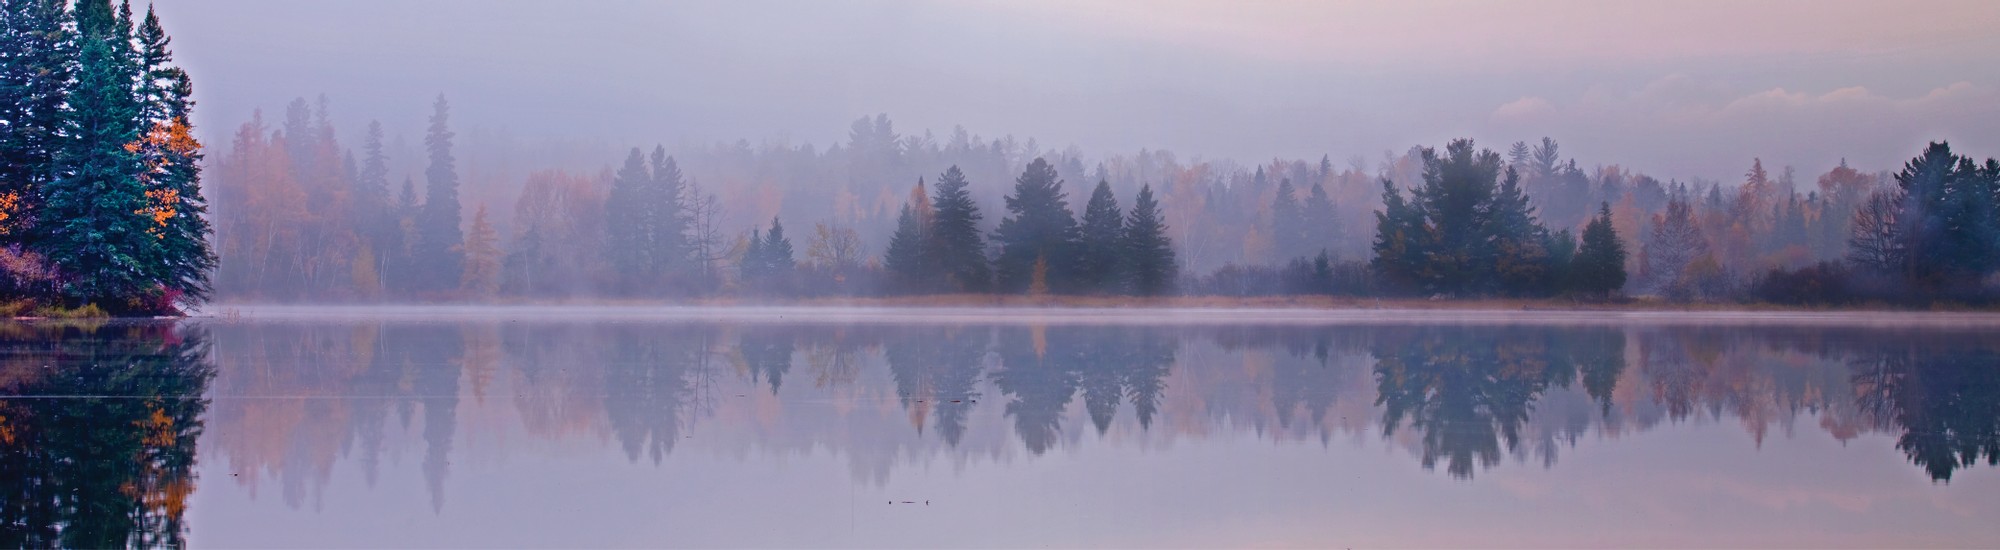 Misty pond with fir trees